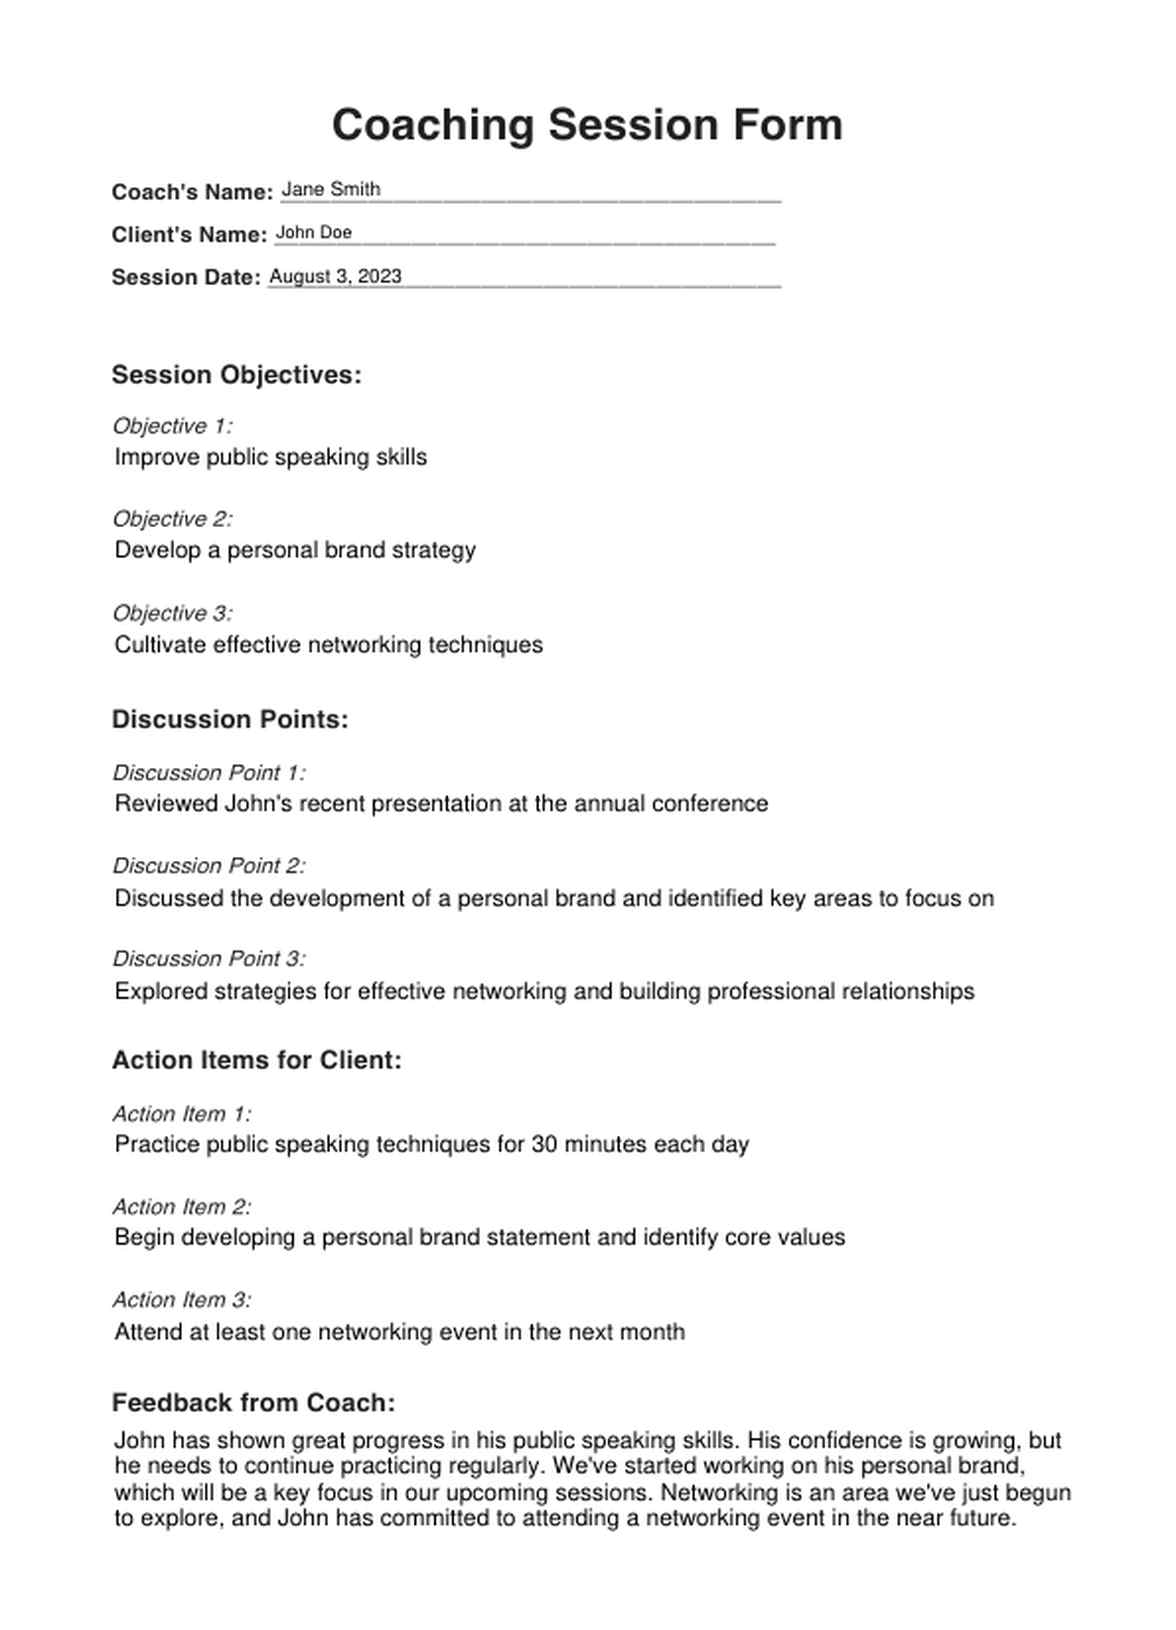 Coaching Form PDF Example